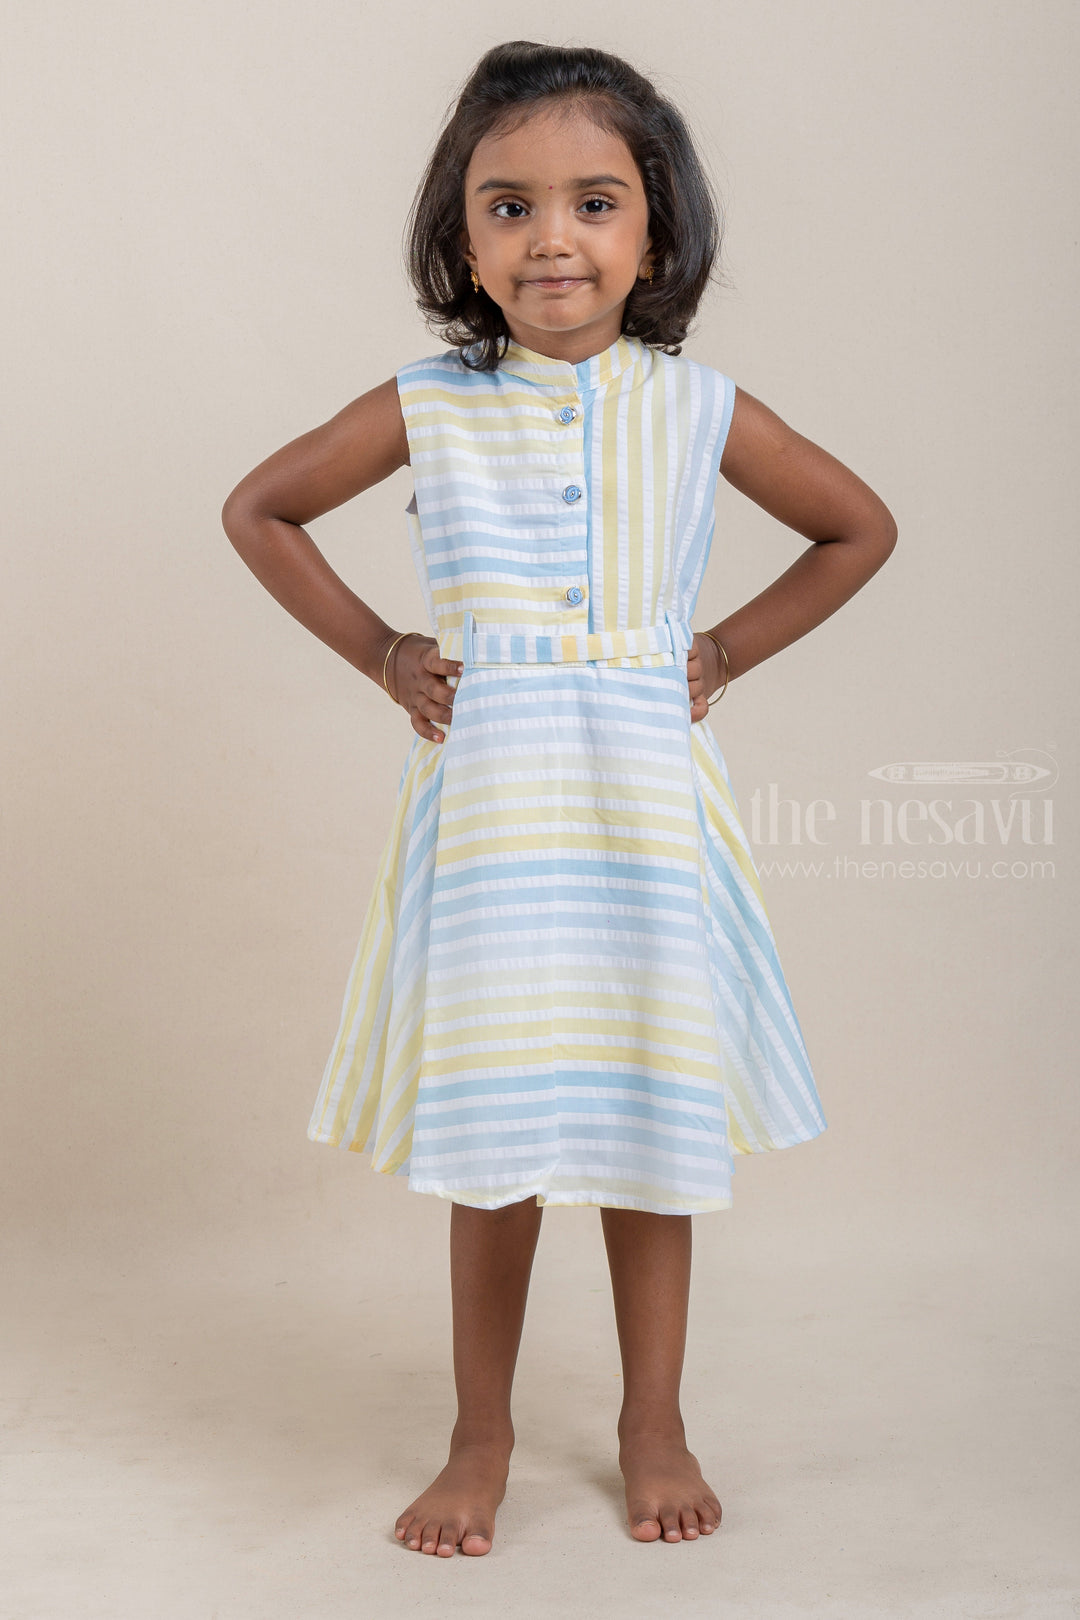 The Nesavu Frocks & Dresses Striped Pattern Blue and Yellow Cotton Frock for Girls psr silks Nesavu 20 (3Y) / Yellow GFC1070A